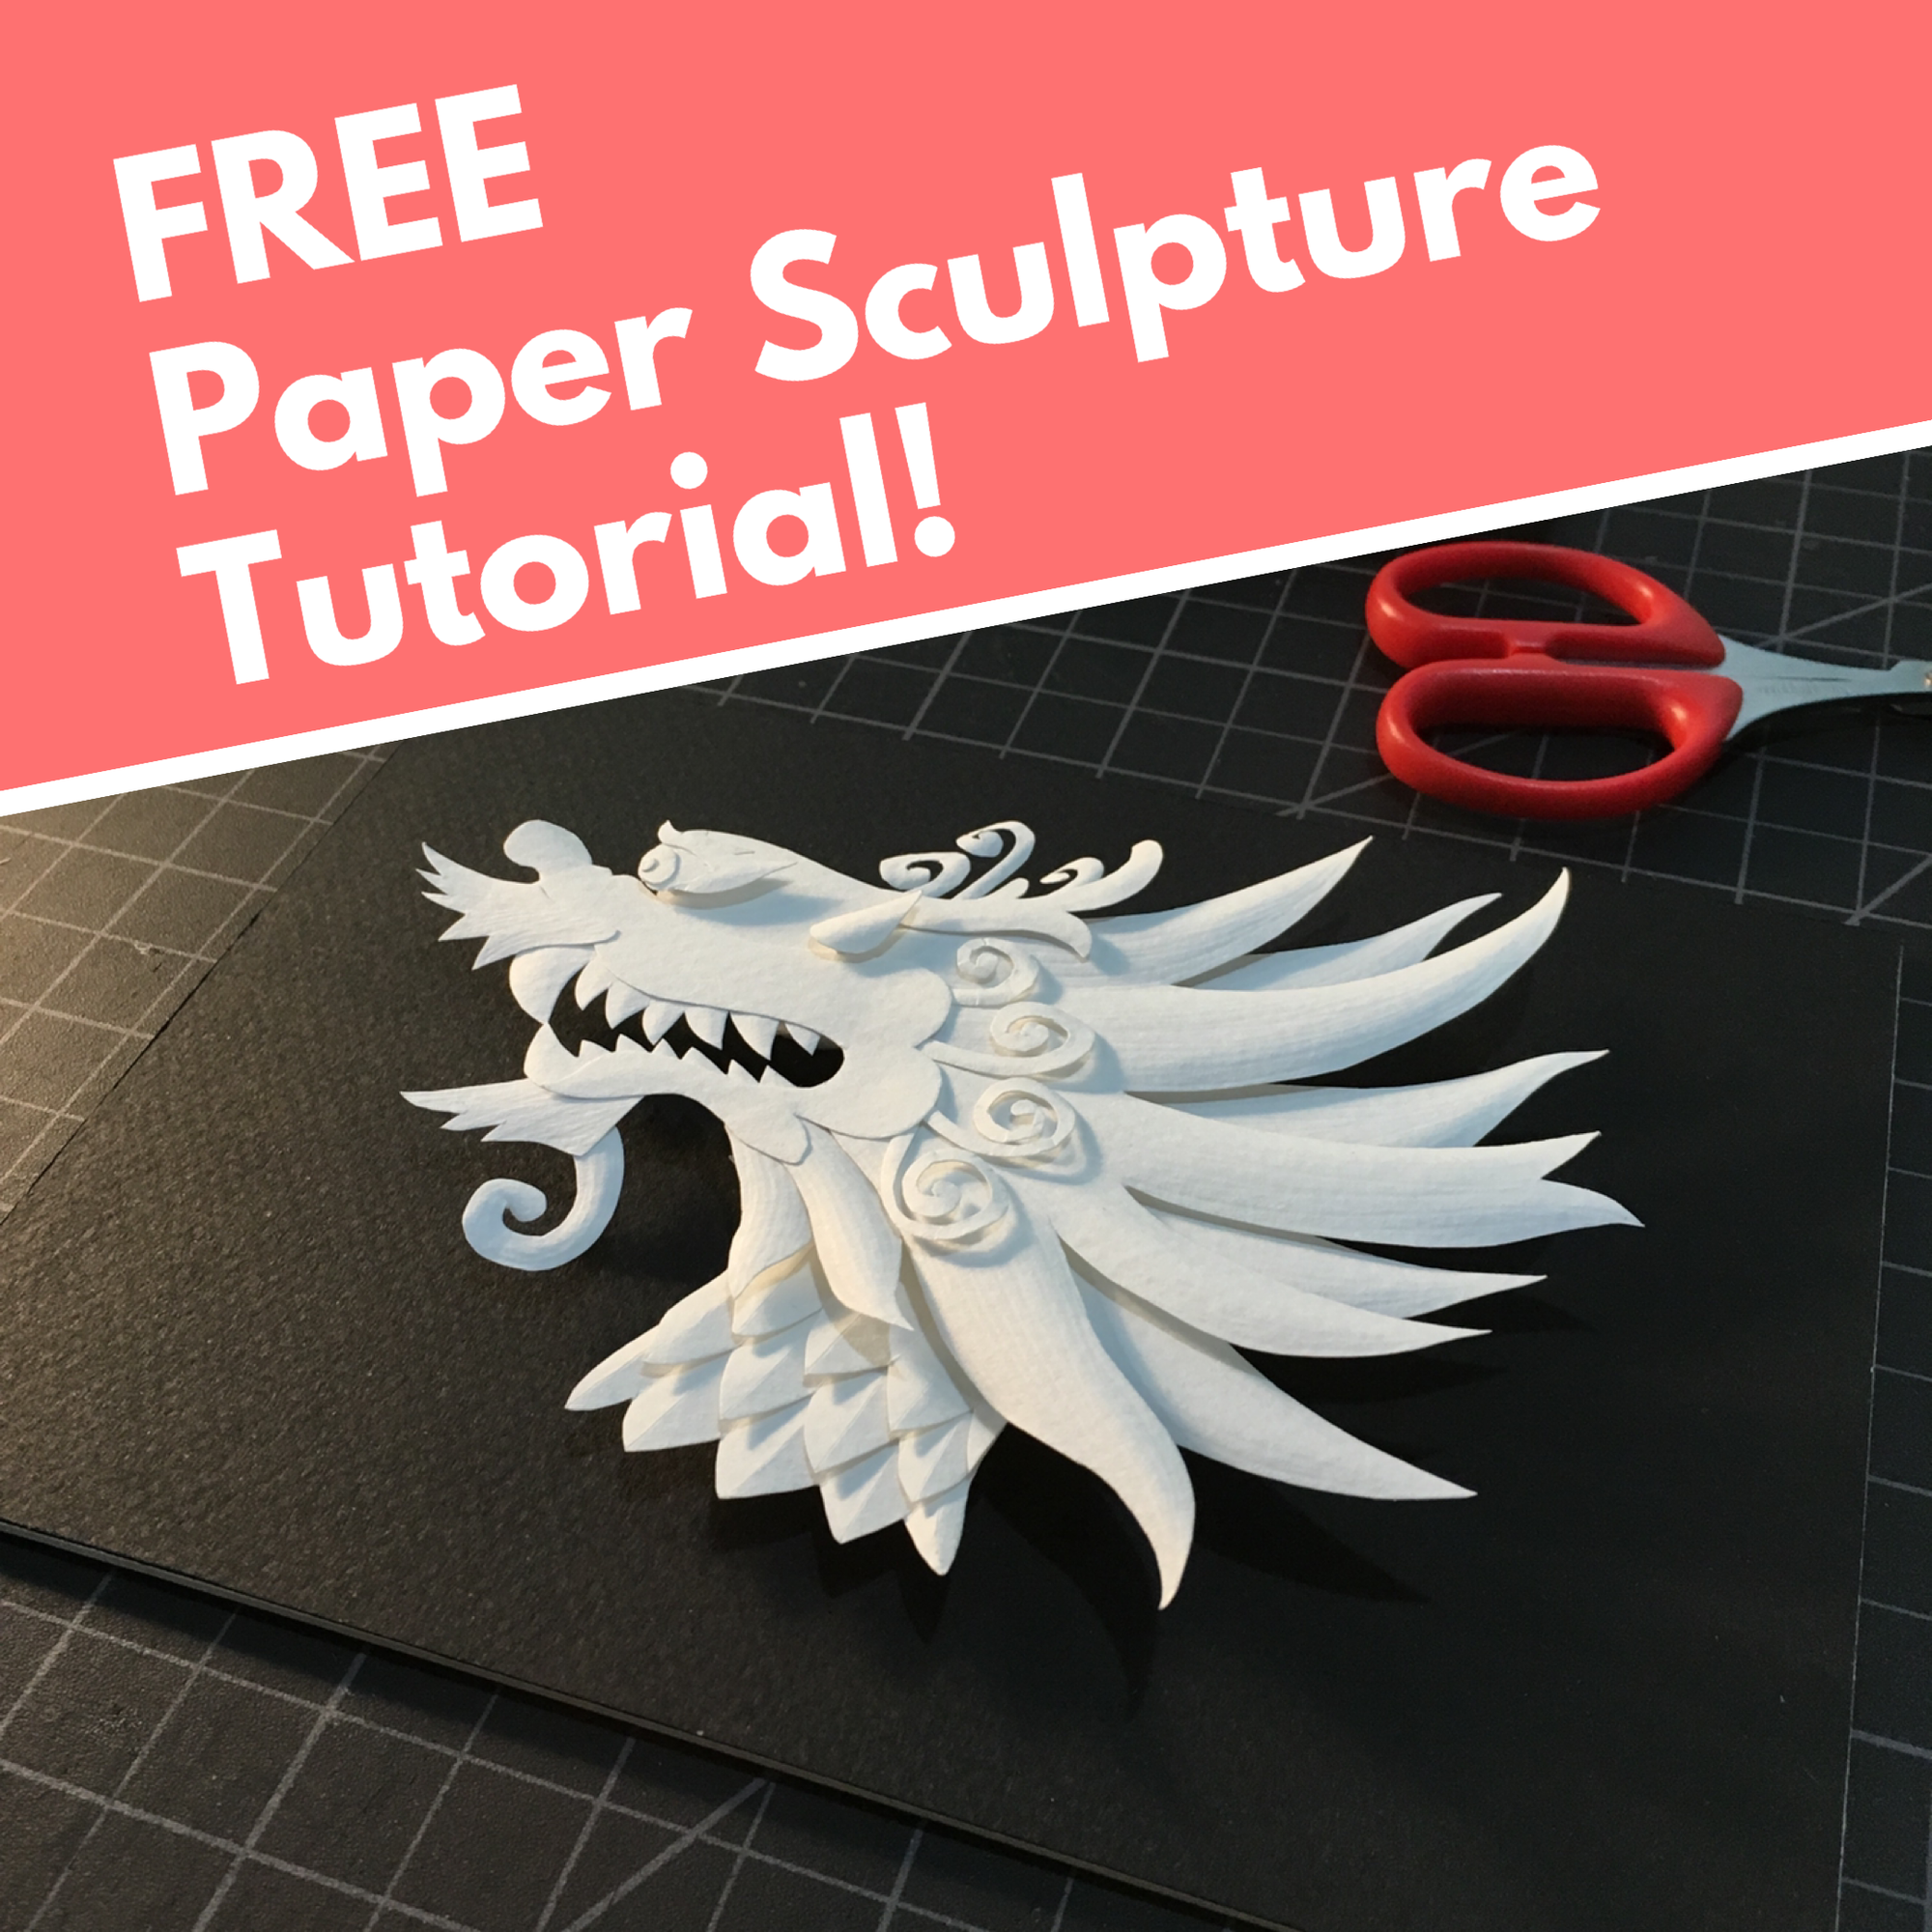 FREE Paper Sculpture Tutorial